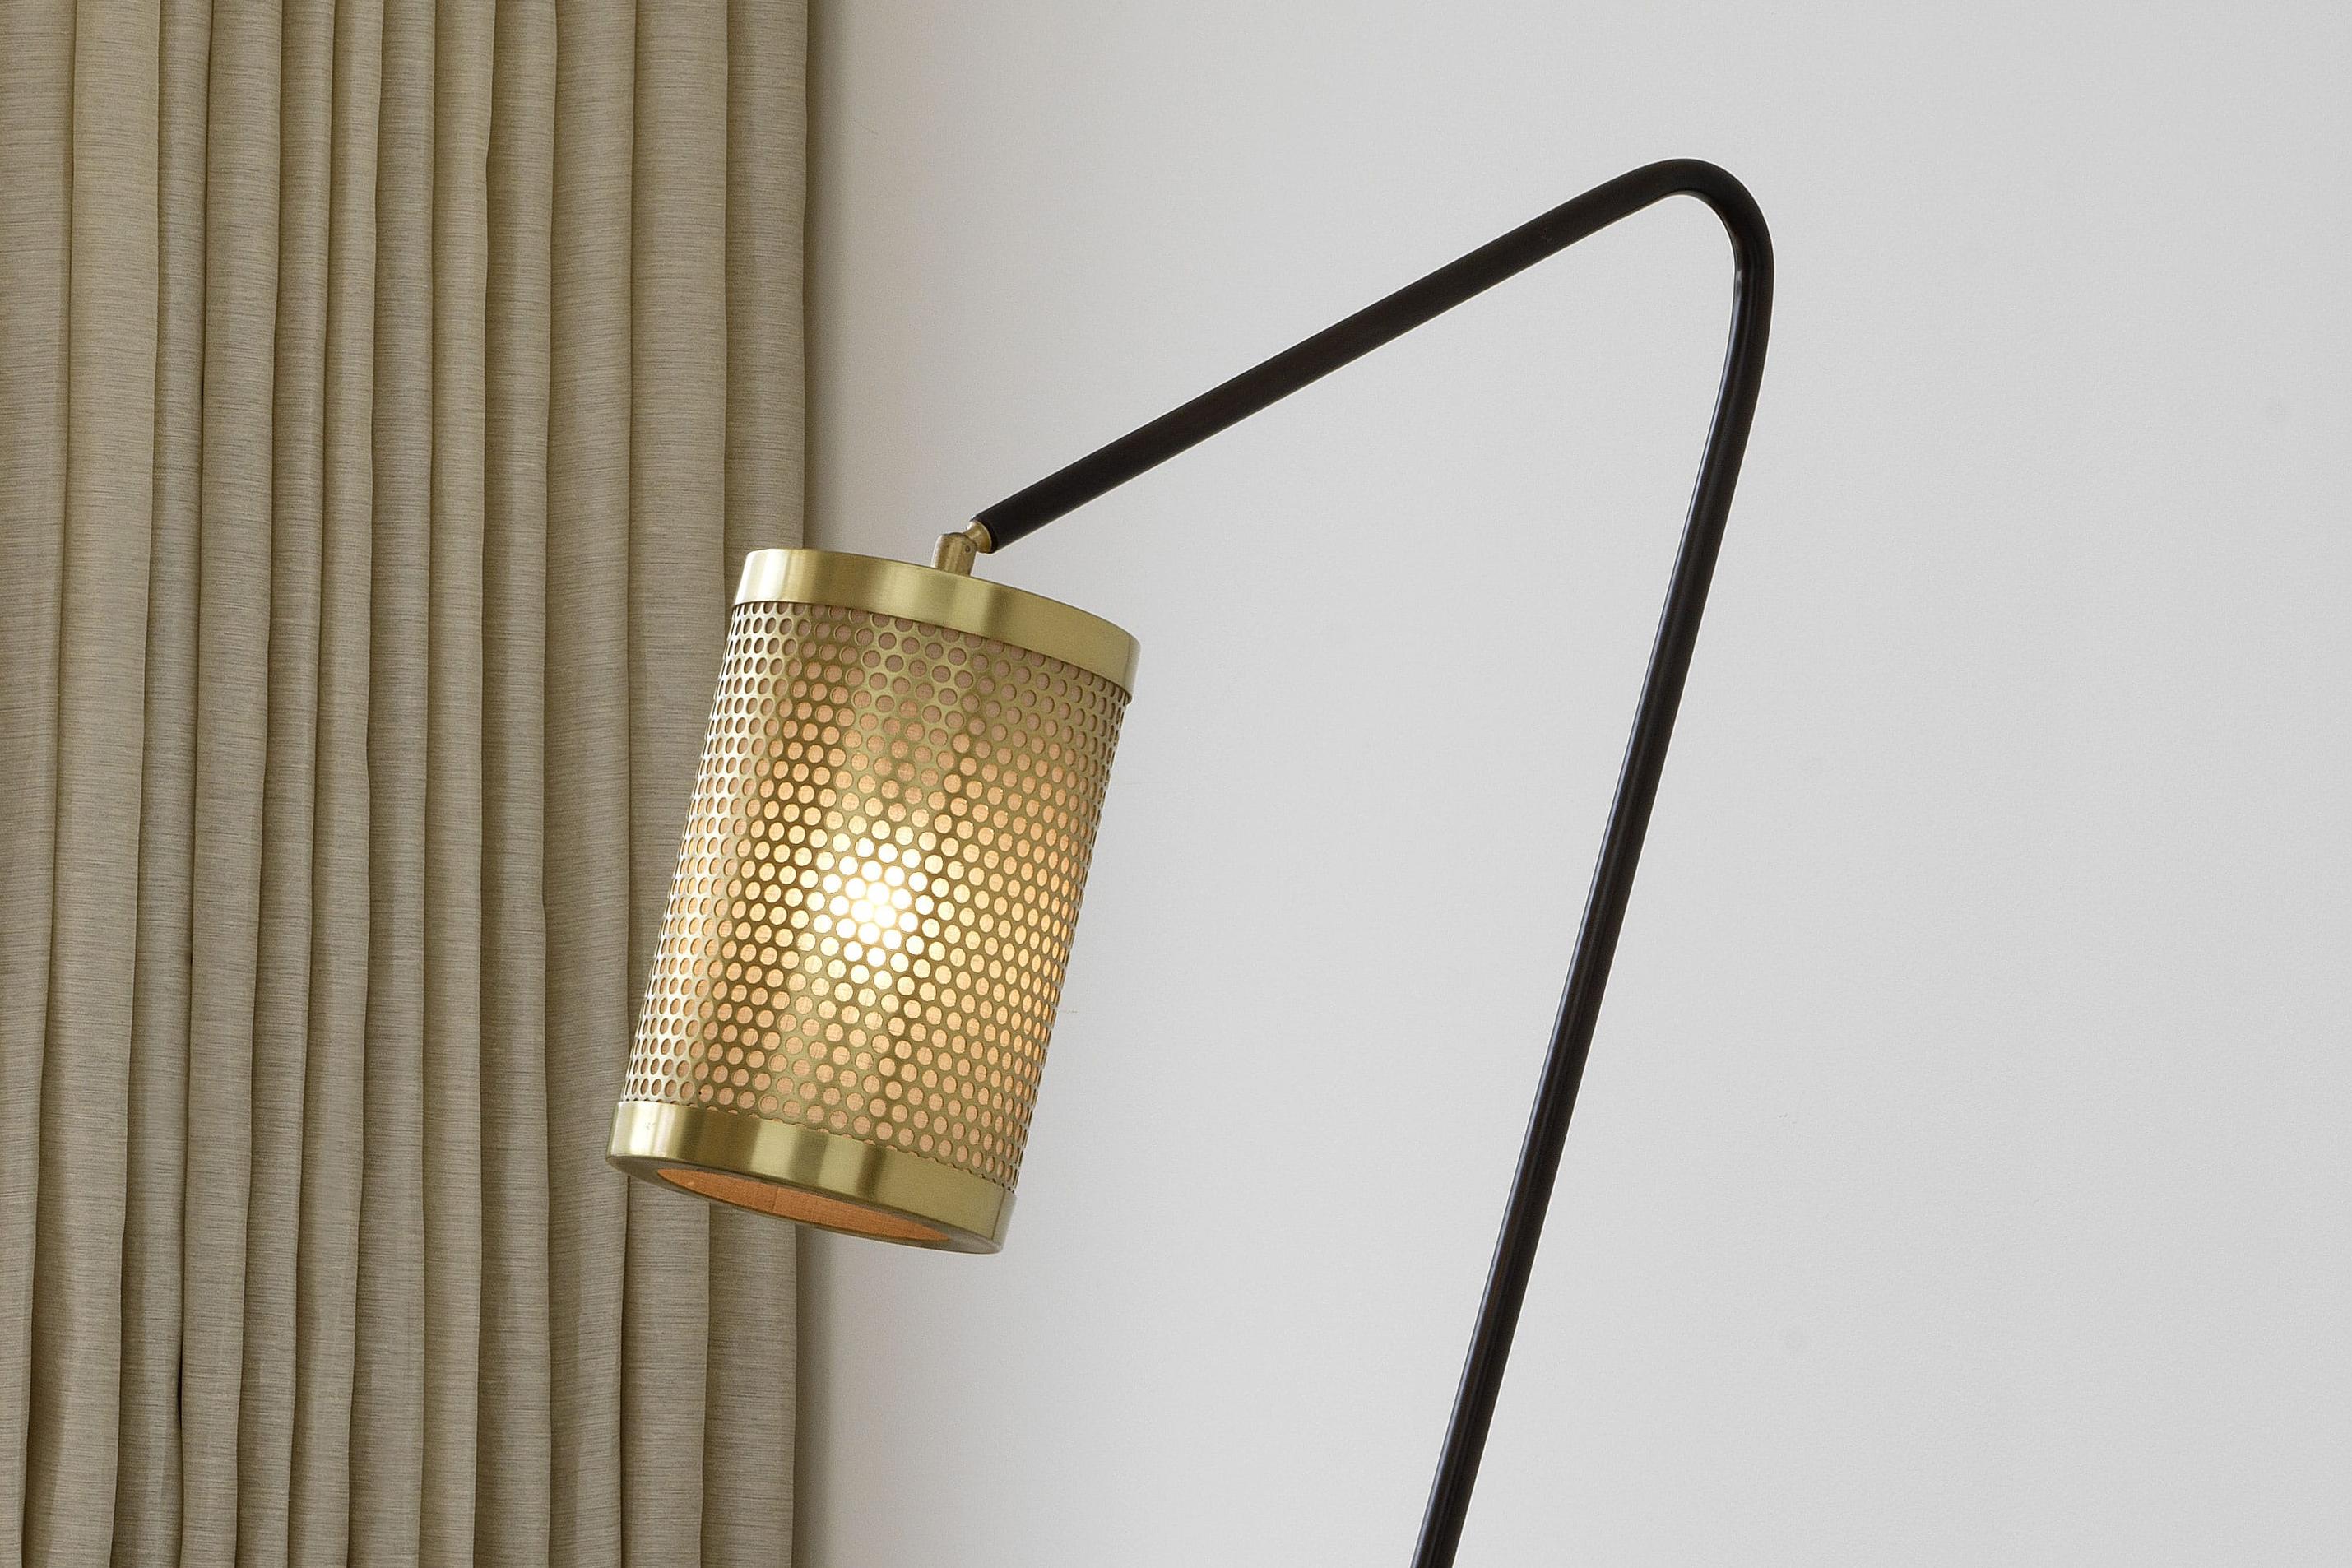 British Pierre Floor Lamp by CTO Lighting